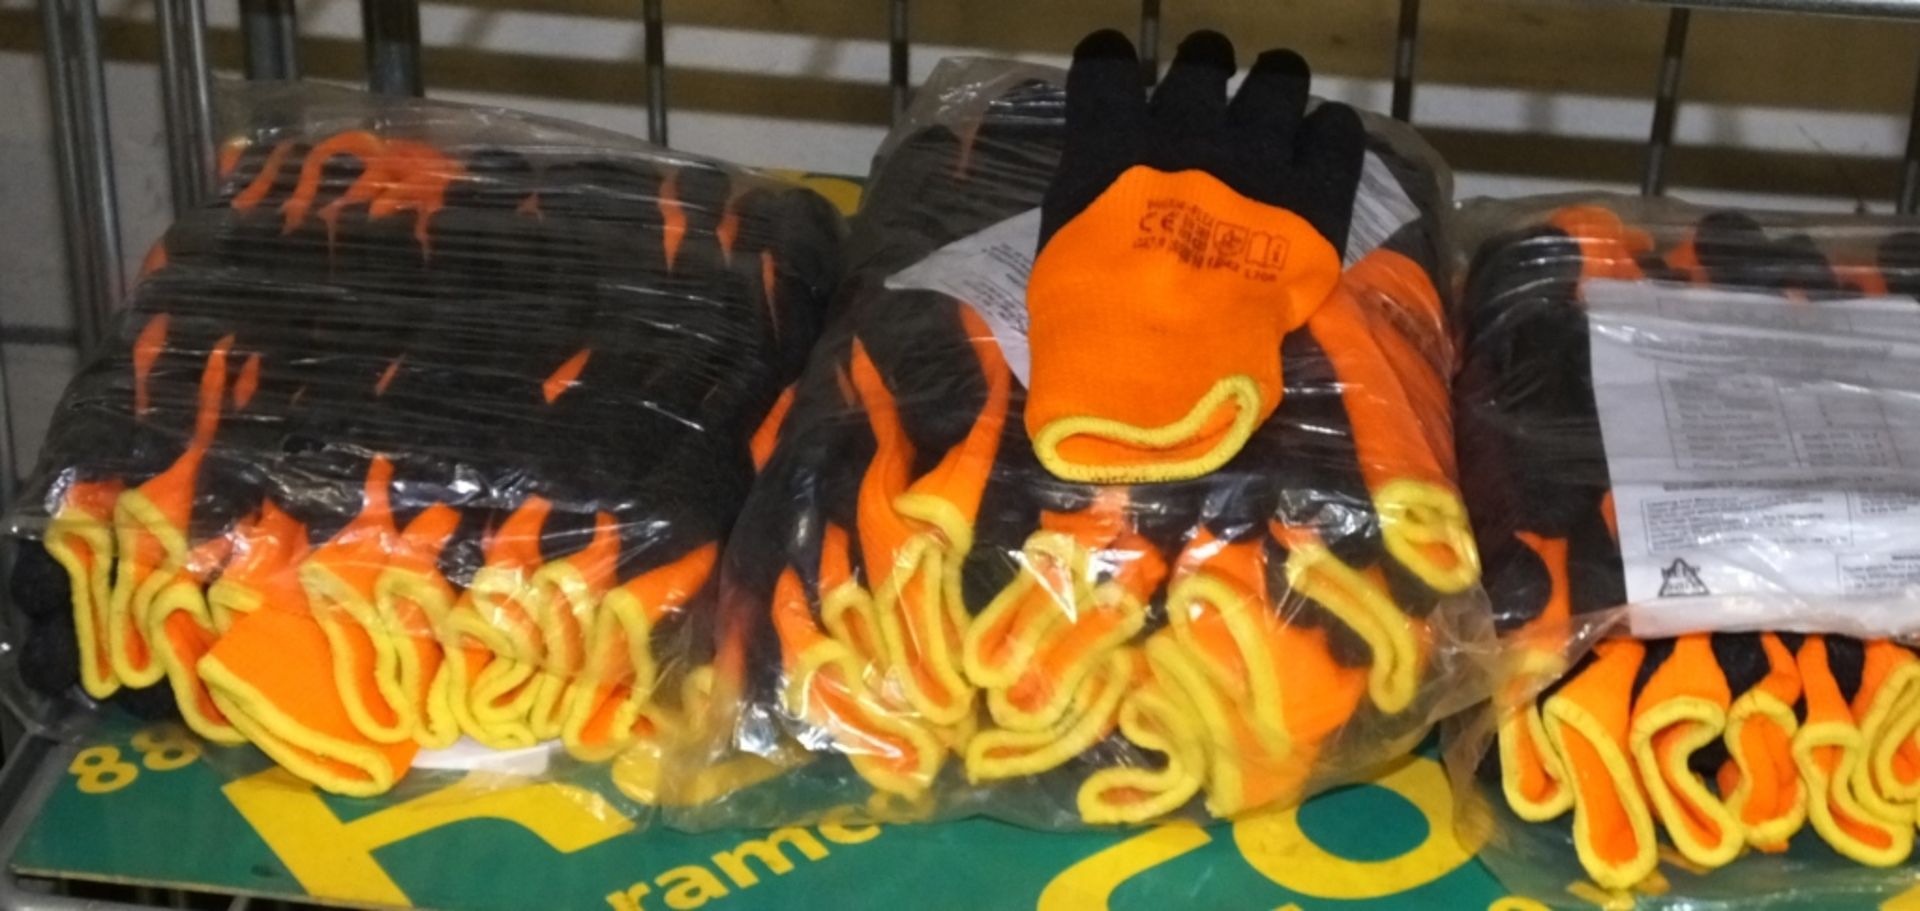 Workwear gloves - orange - 48 pairs - Image 2 of 2